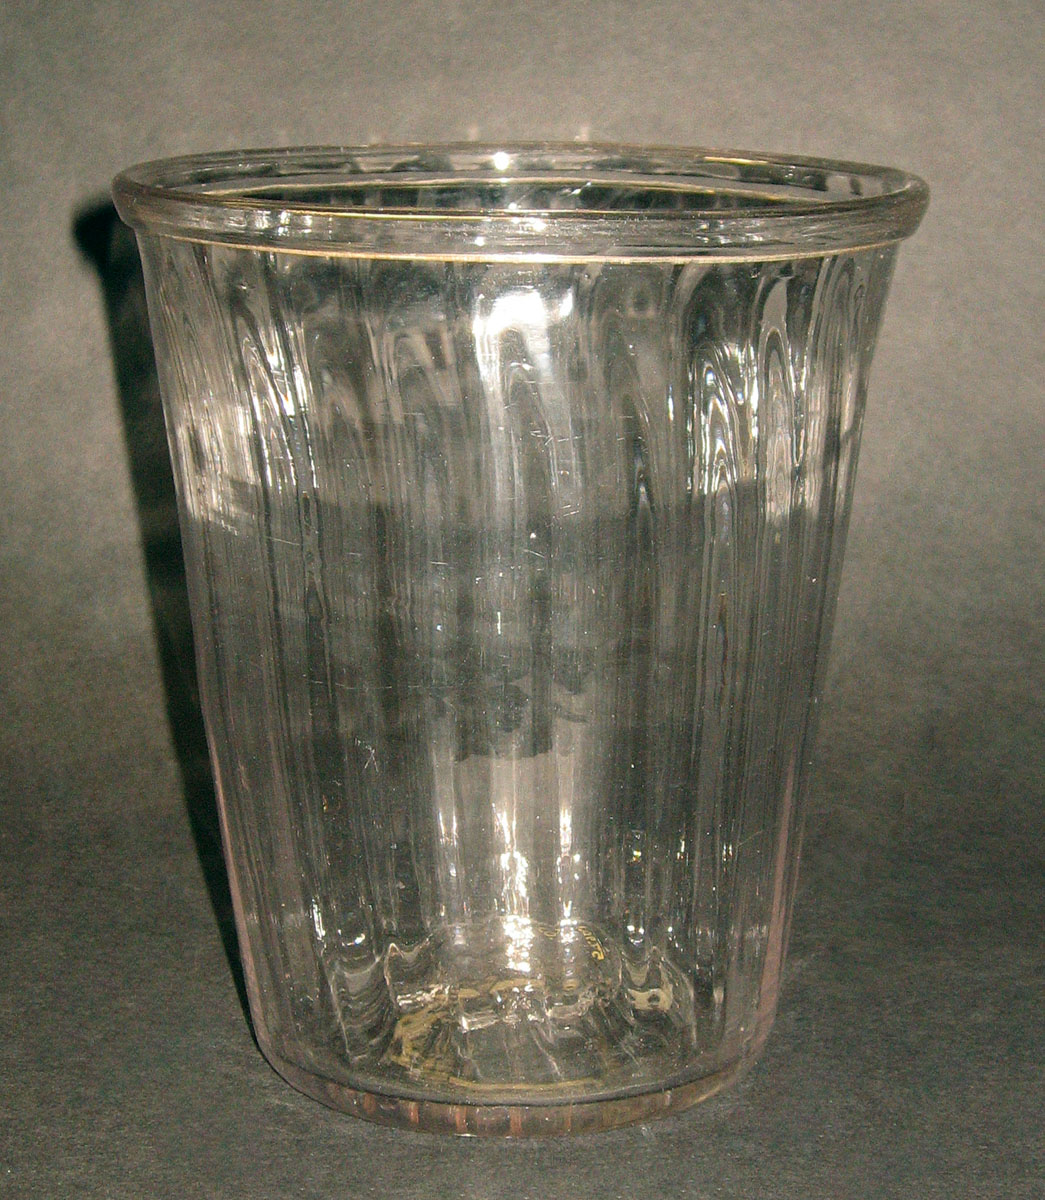 1957.0090.001 Glass tumbler